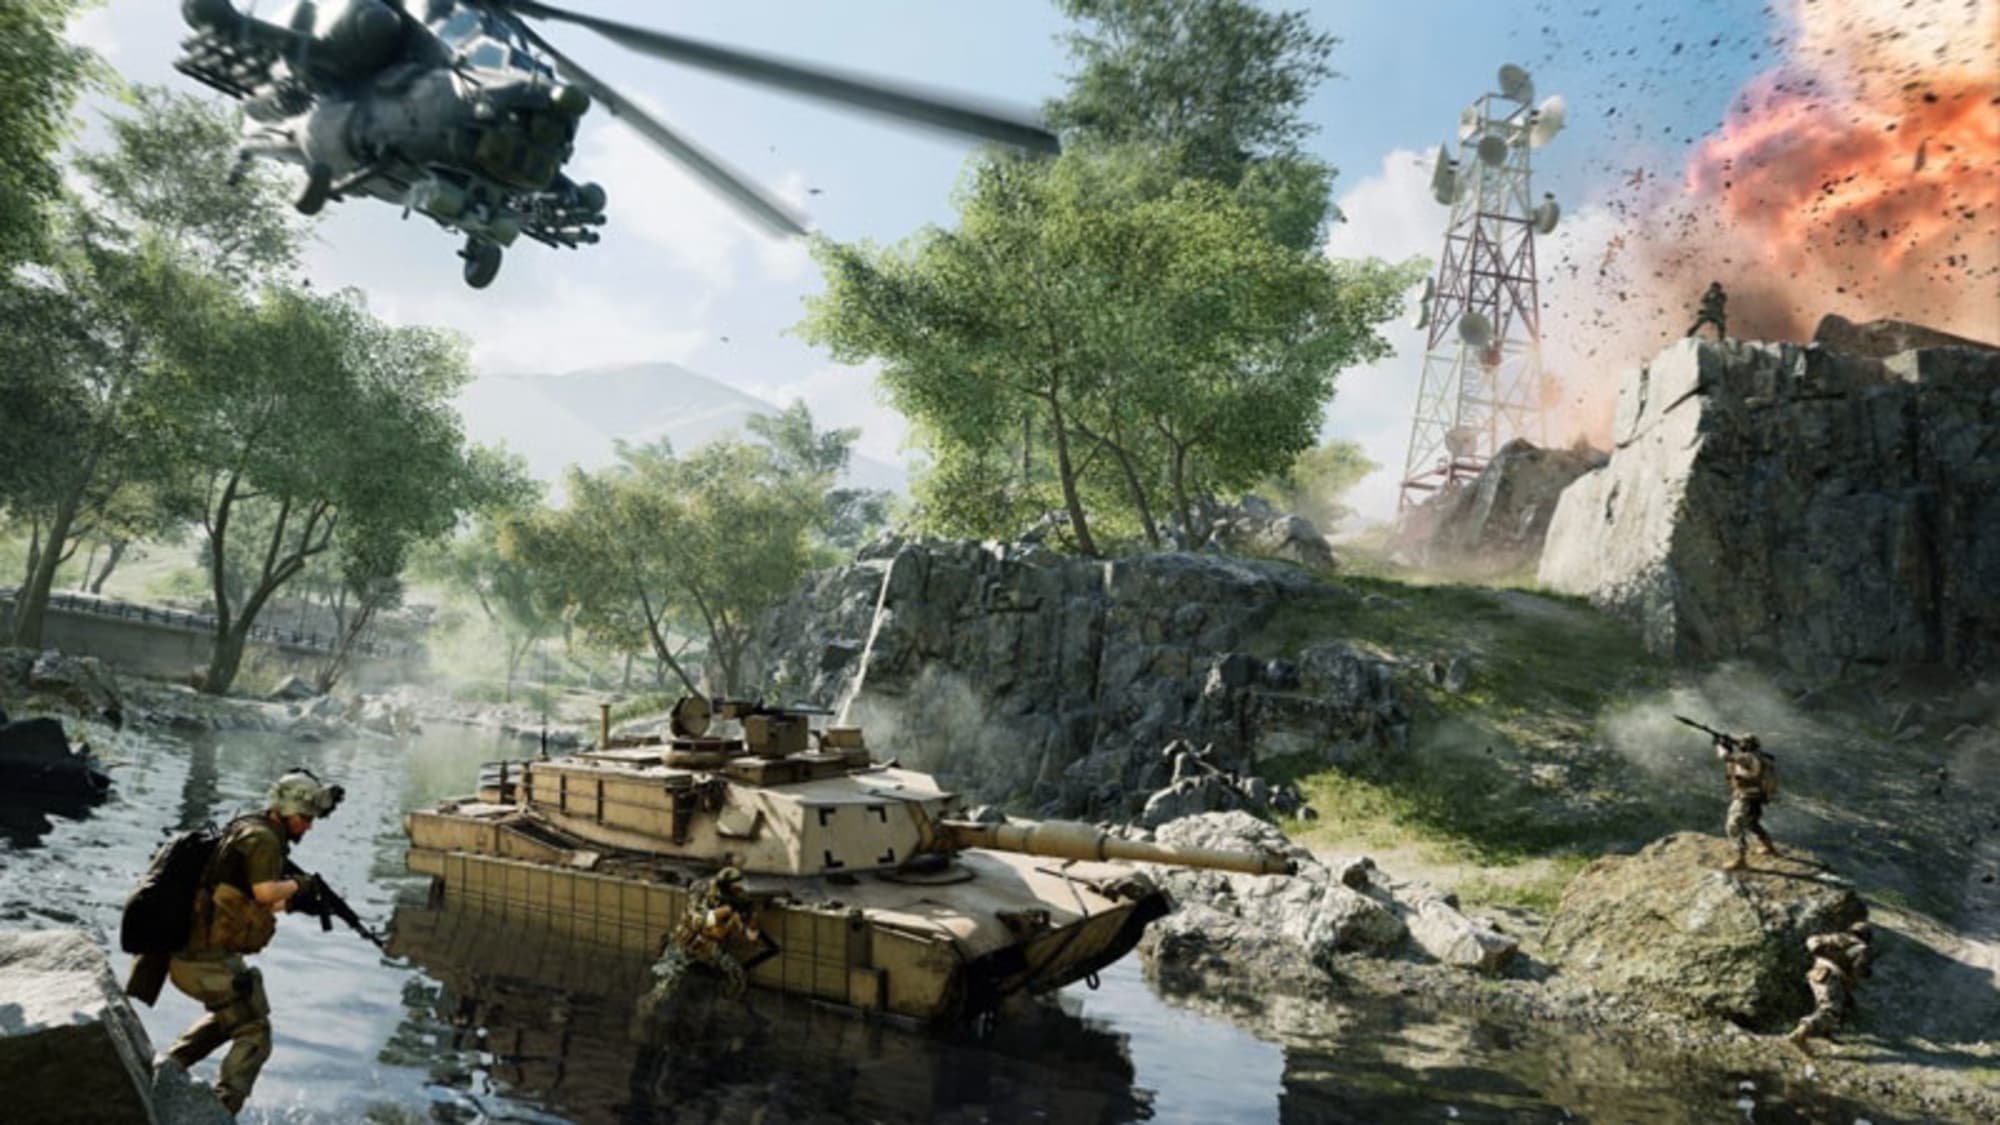 Battlefield 2042 - Battlefield Portal Gameplay Trailer